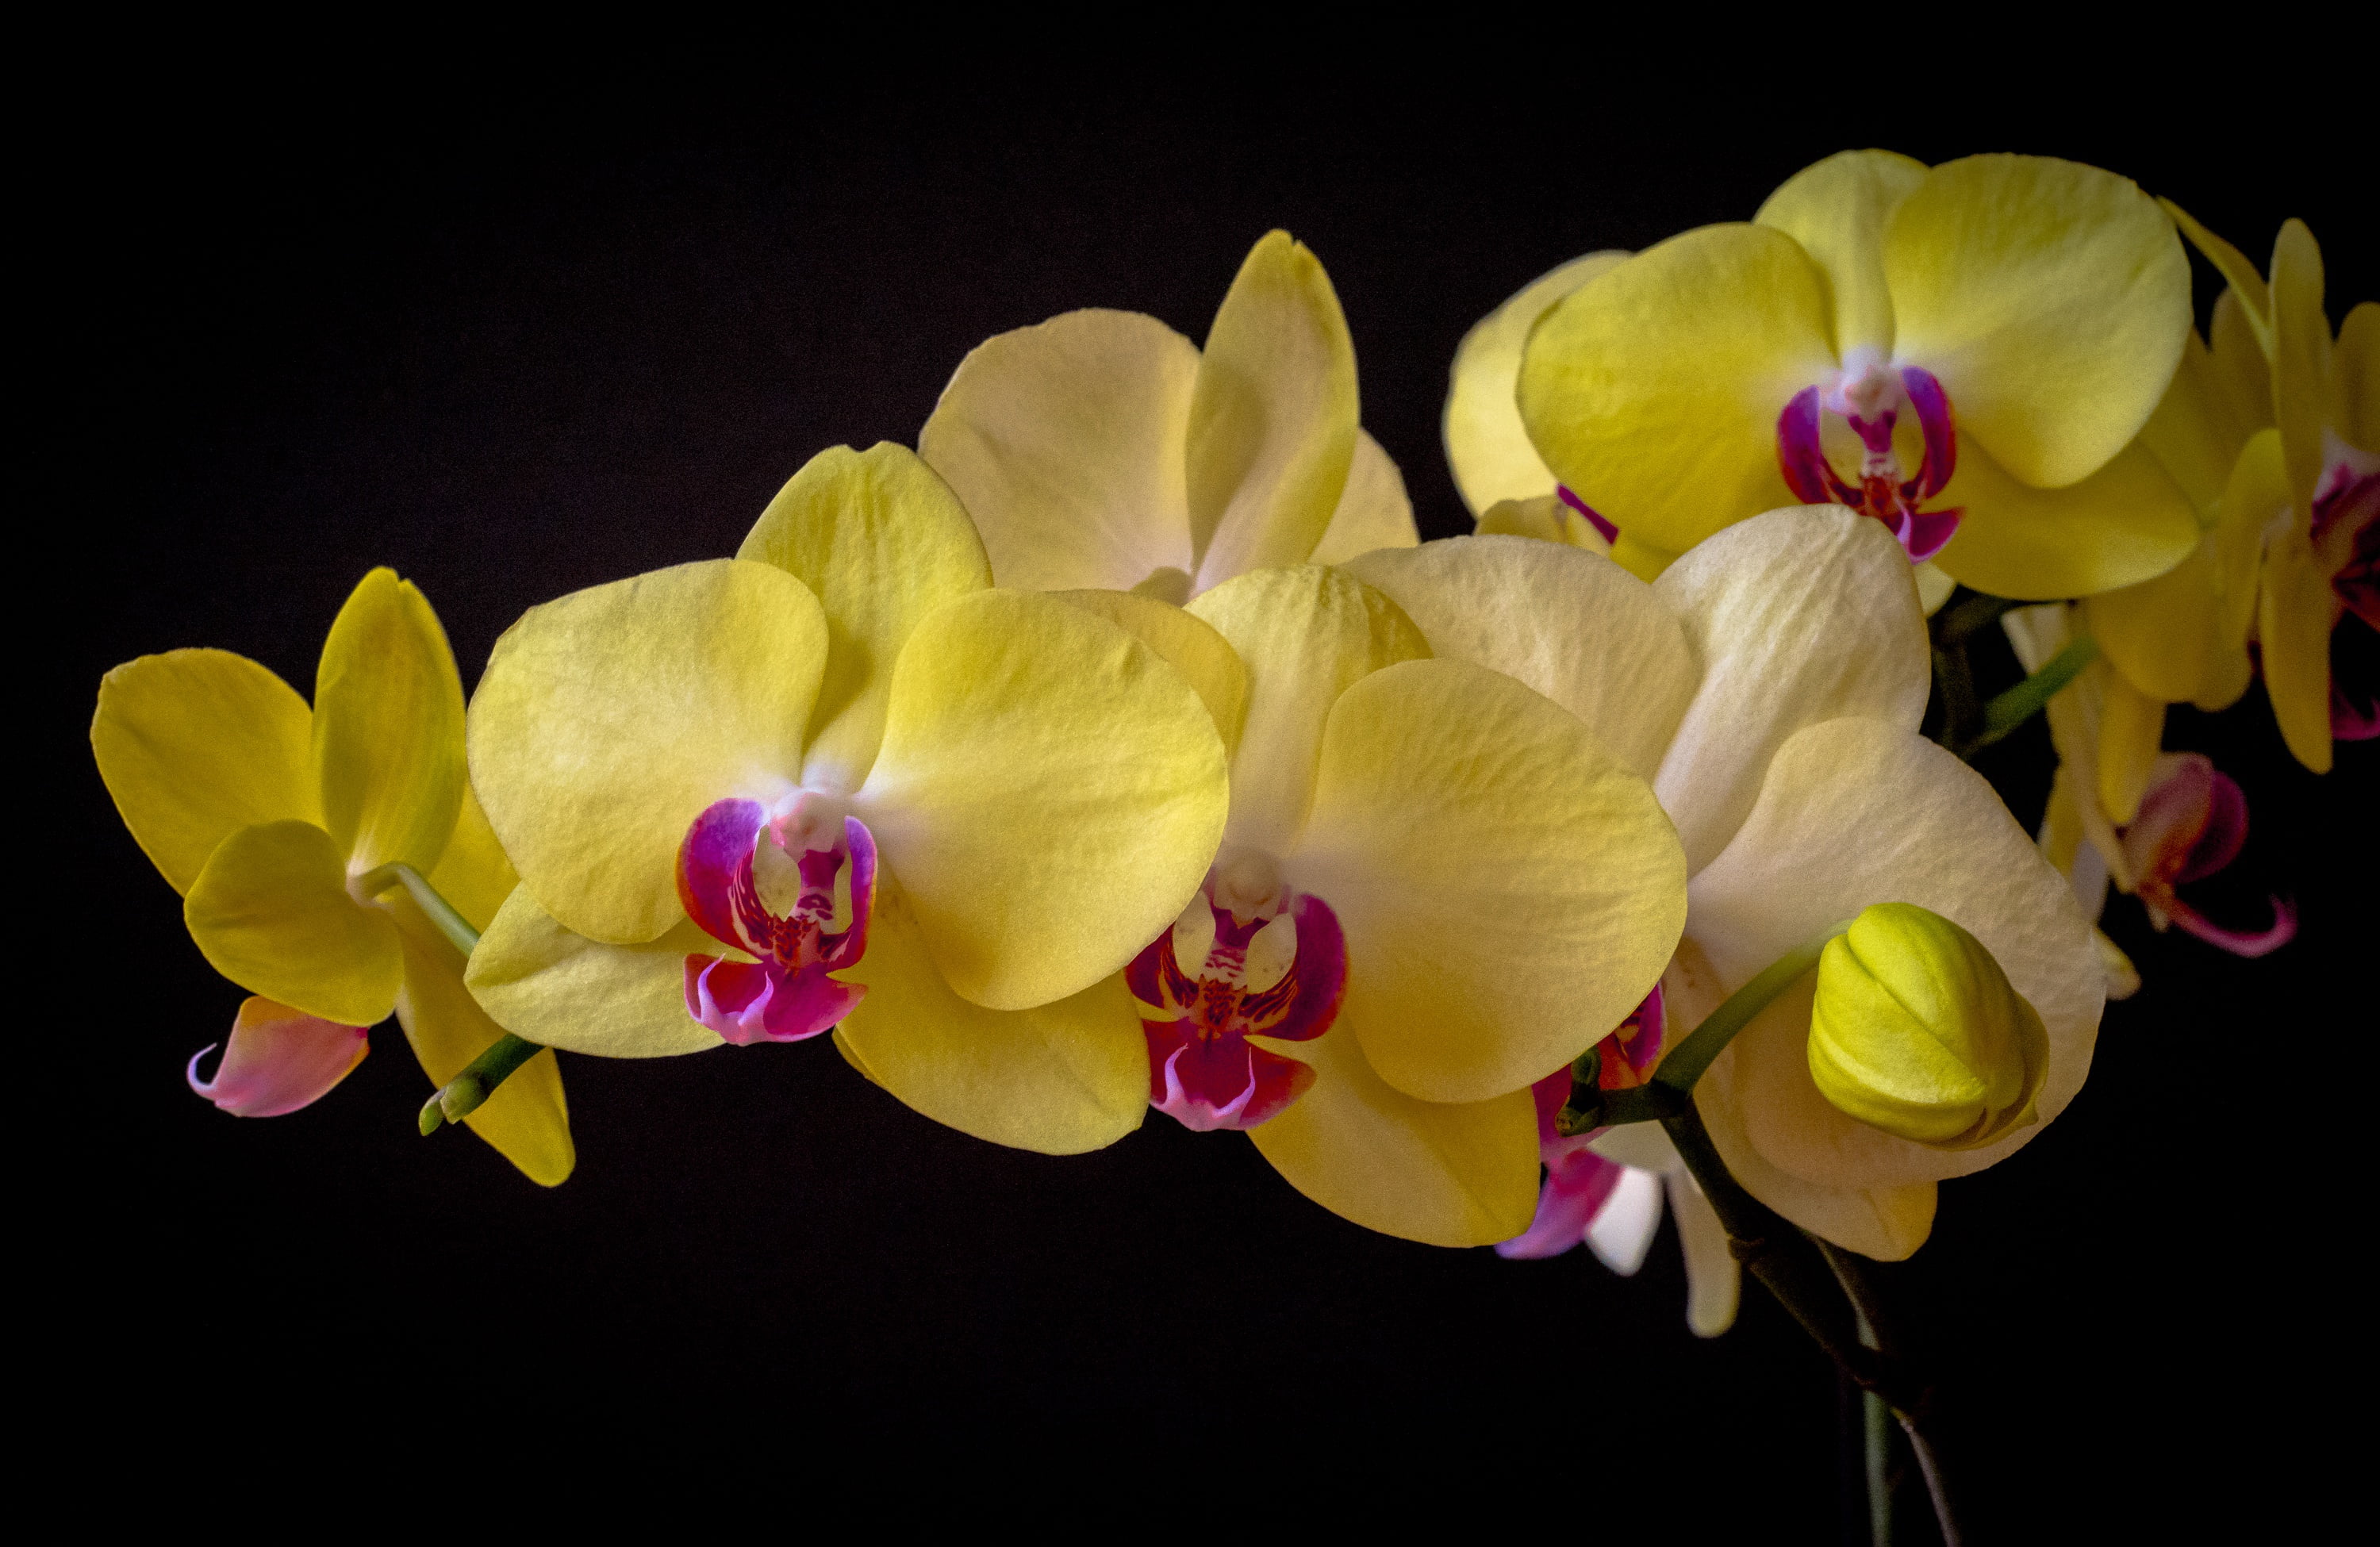 Orchid, Phalaenopsis, the dark background